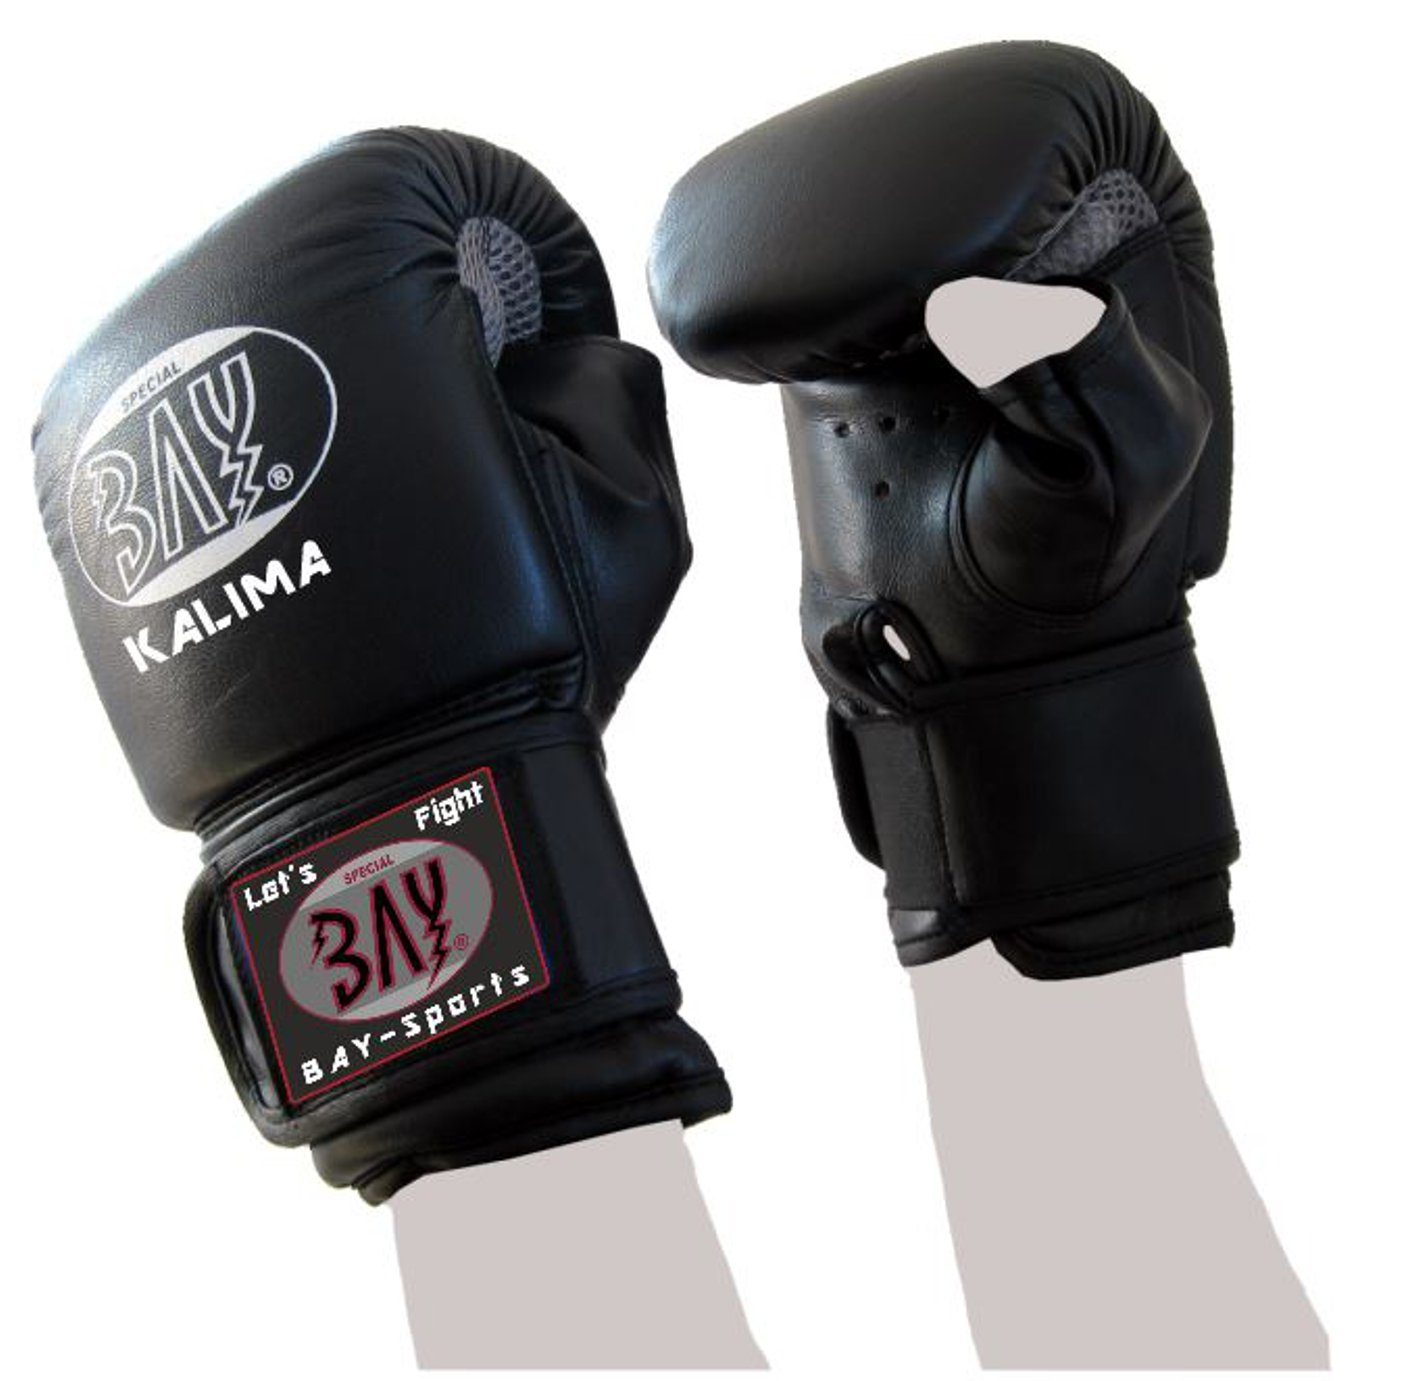 BAY-Sports Sandsackhandschuhe »Kalima Boxhandschuhe Sandsack Boxsack  Handschutz«, Leder, Mesheinsätze, S - XL online kaufen | OTTO